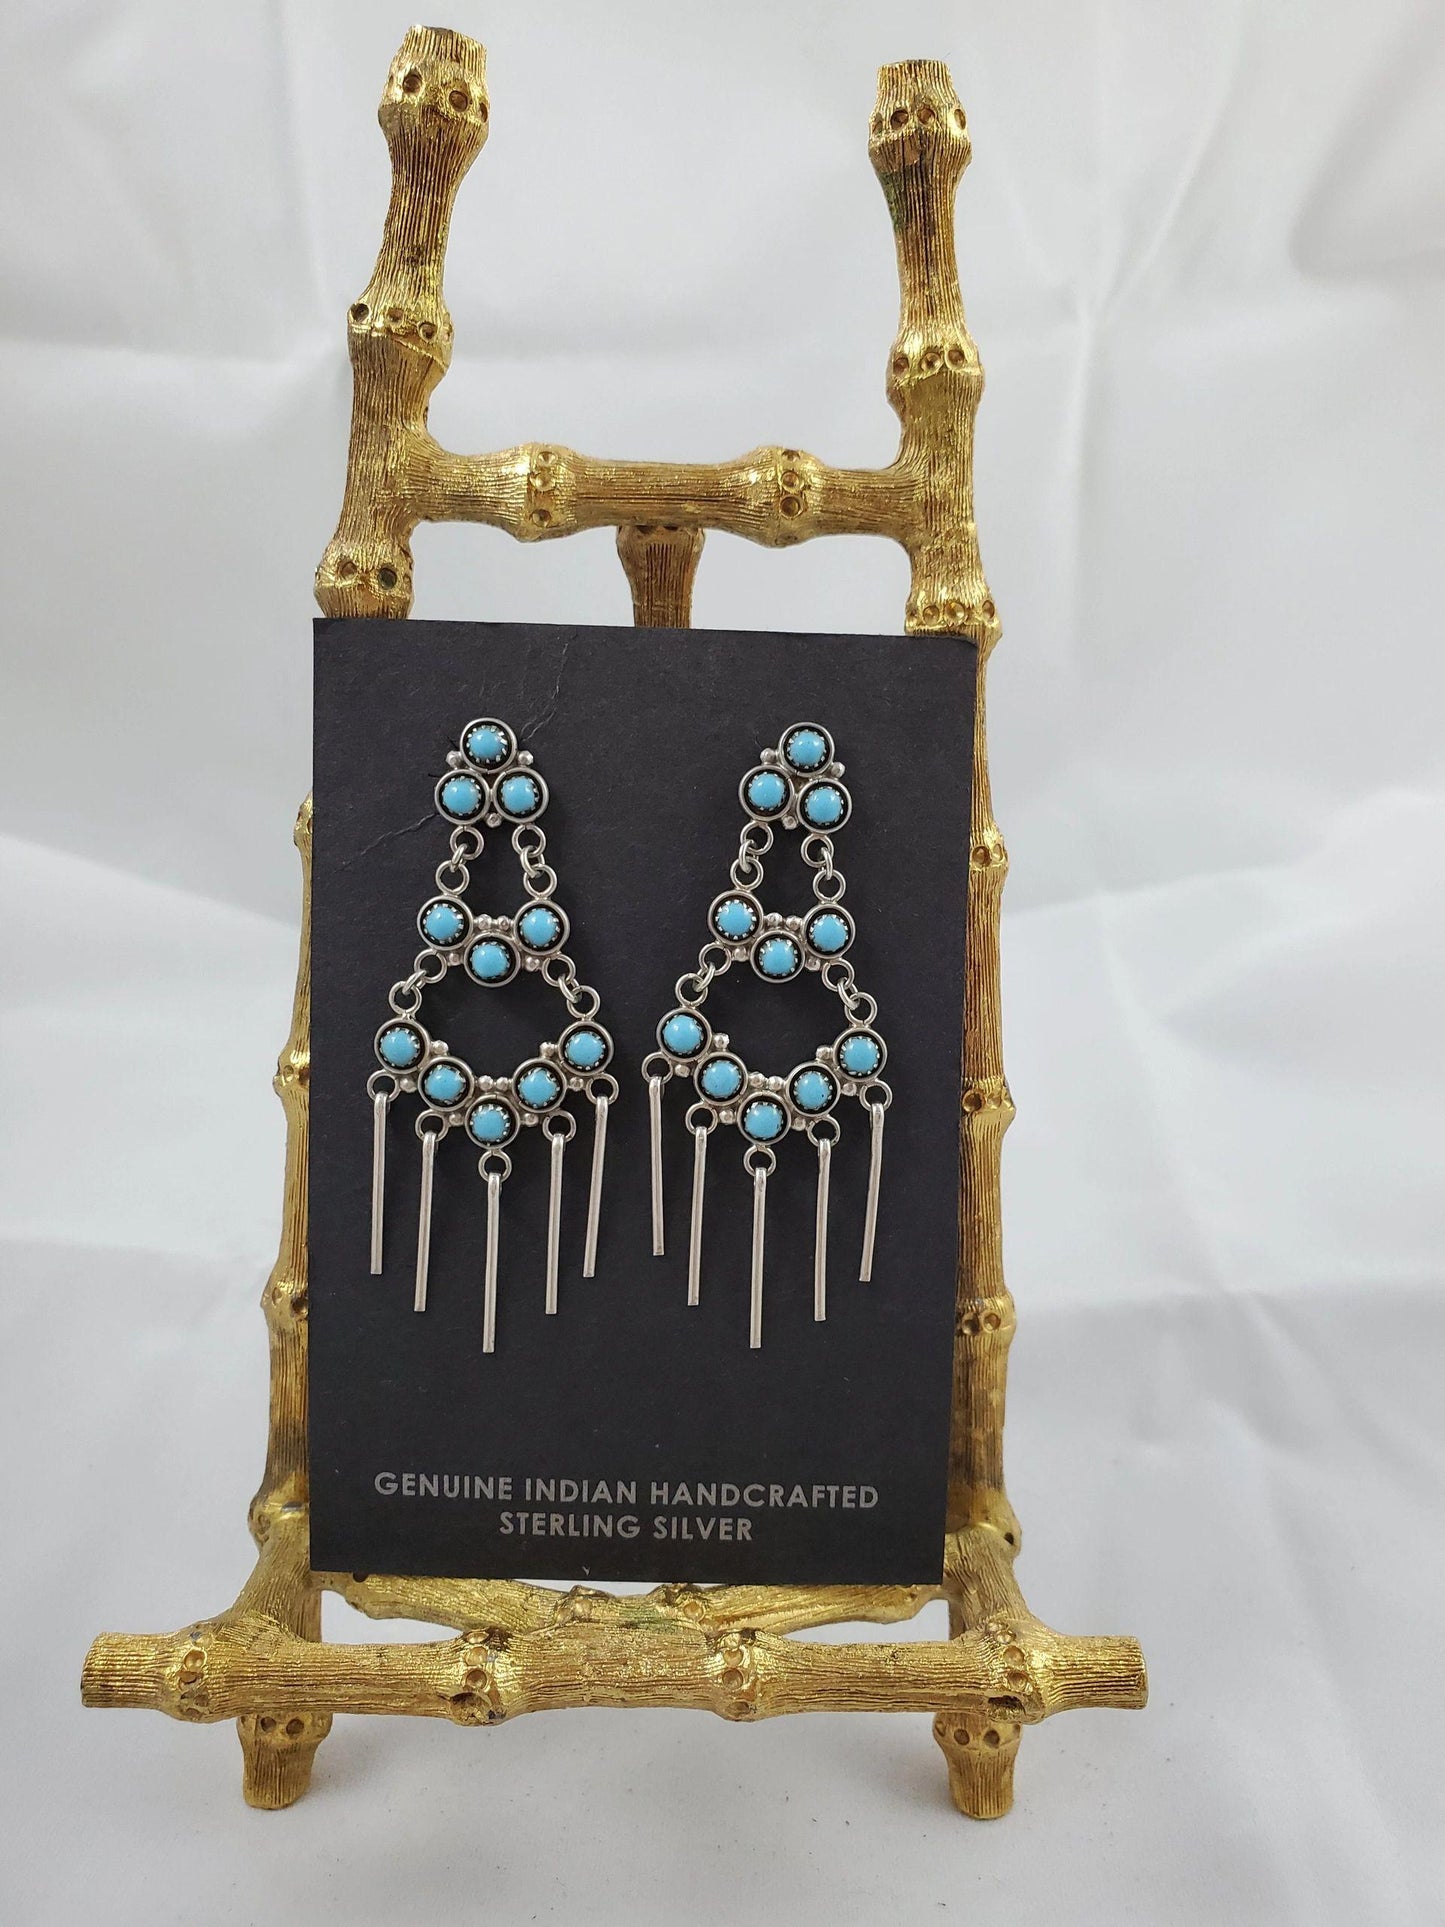 Tripple tier dot rain chandelier earrings - Albuquerque Pawn Shop